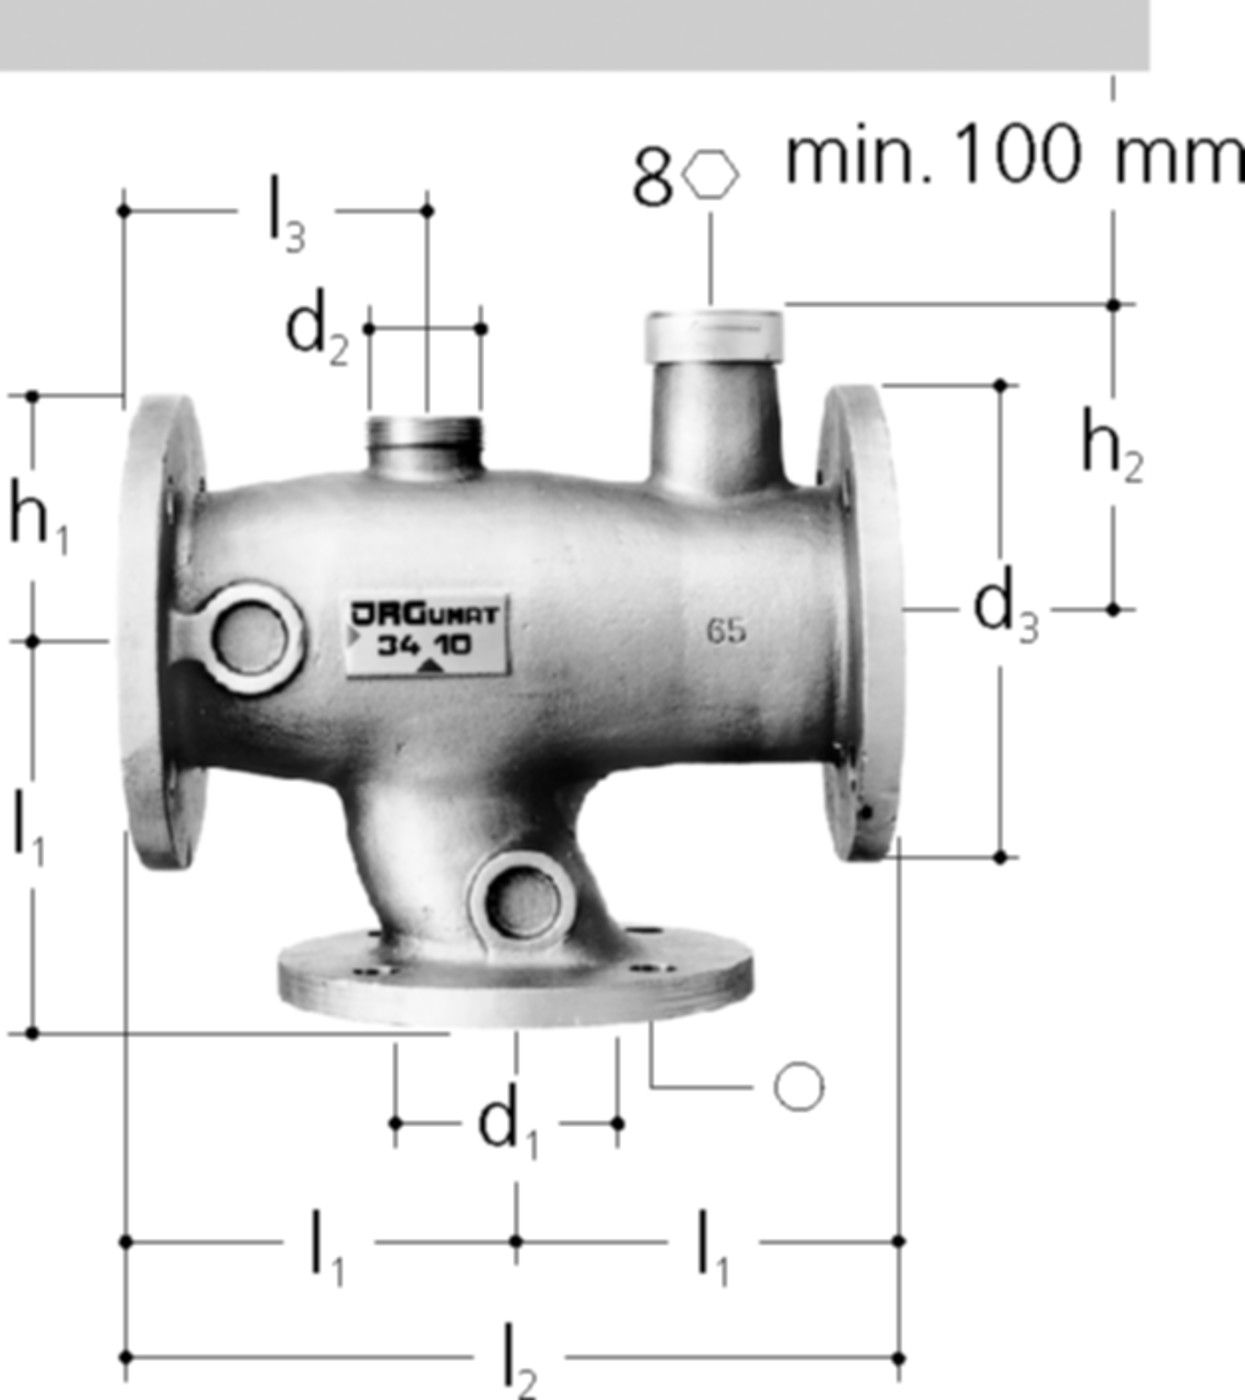 JRGUMAT Thermomischer PN 10 DN 80 55°C manuell °C45-65 3410.808 - JRG Armaturen